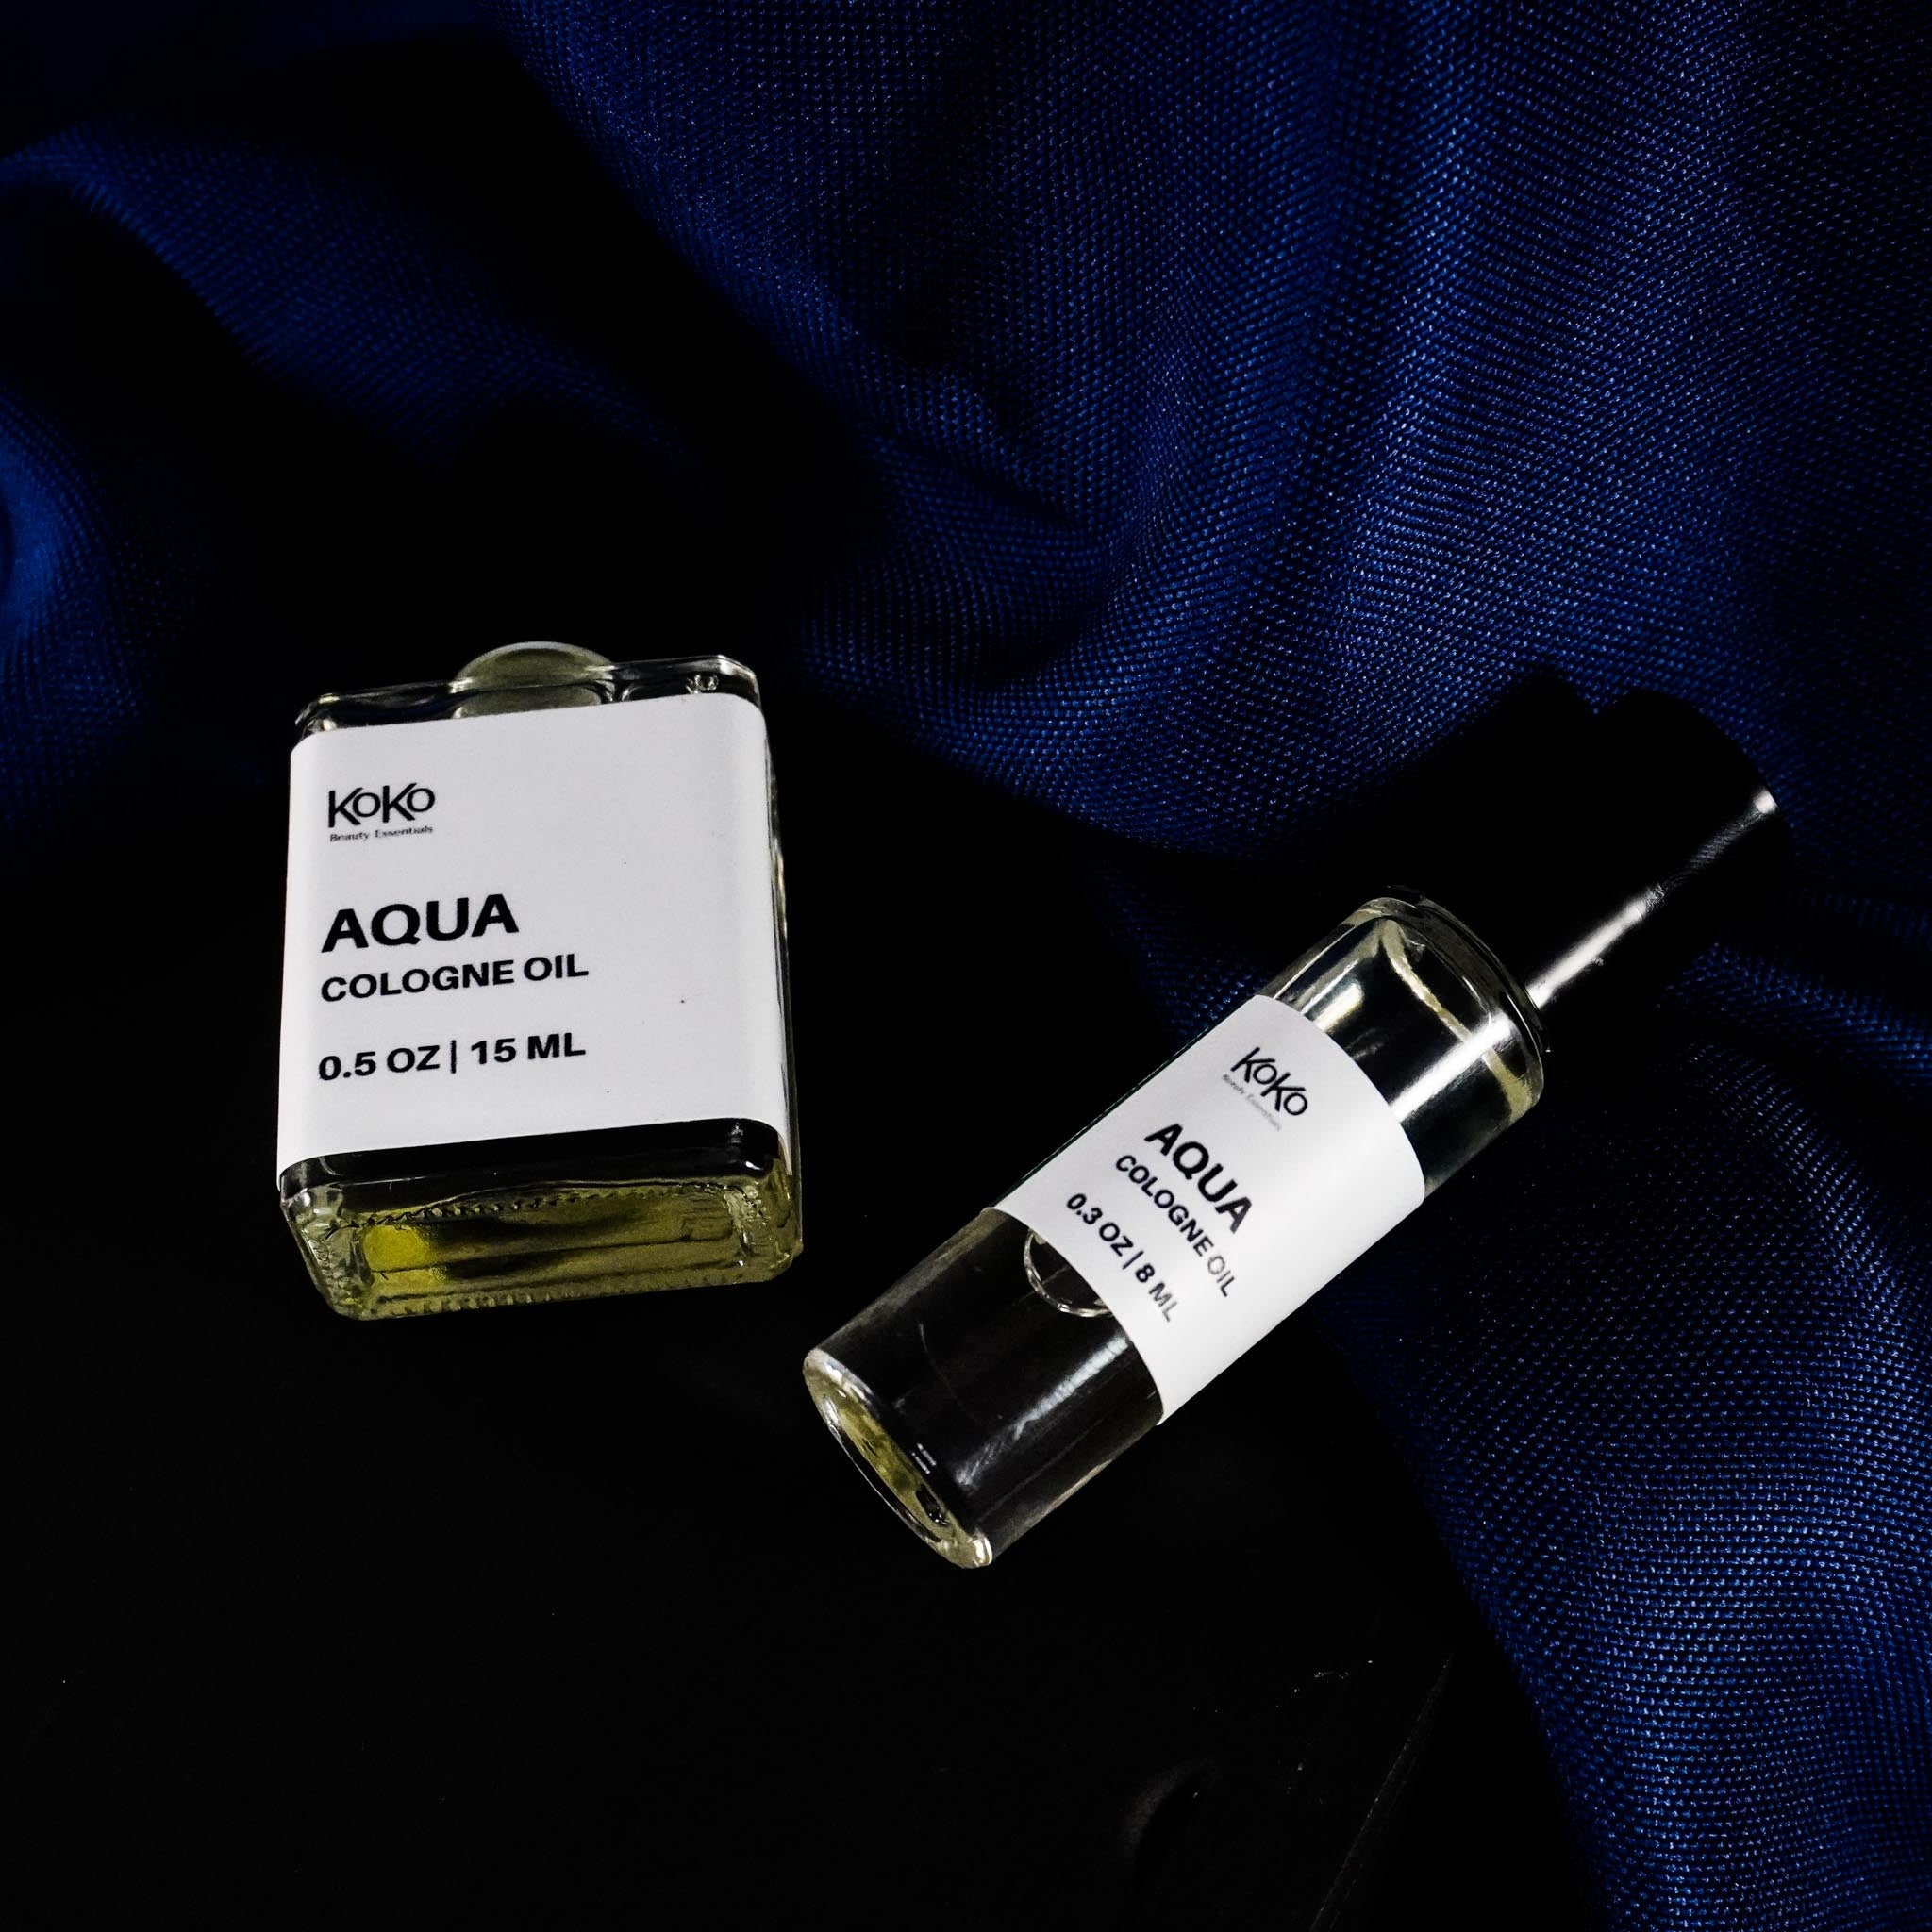 Aqua Cologne Oil